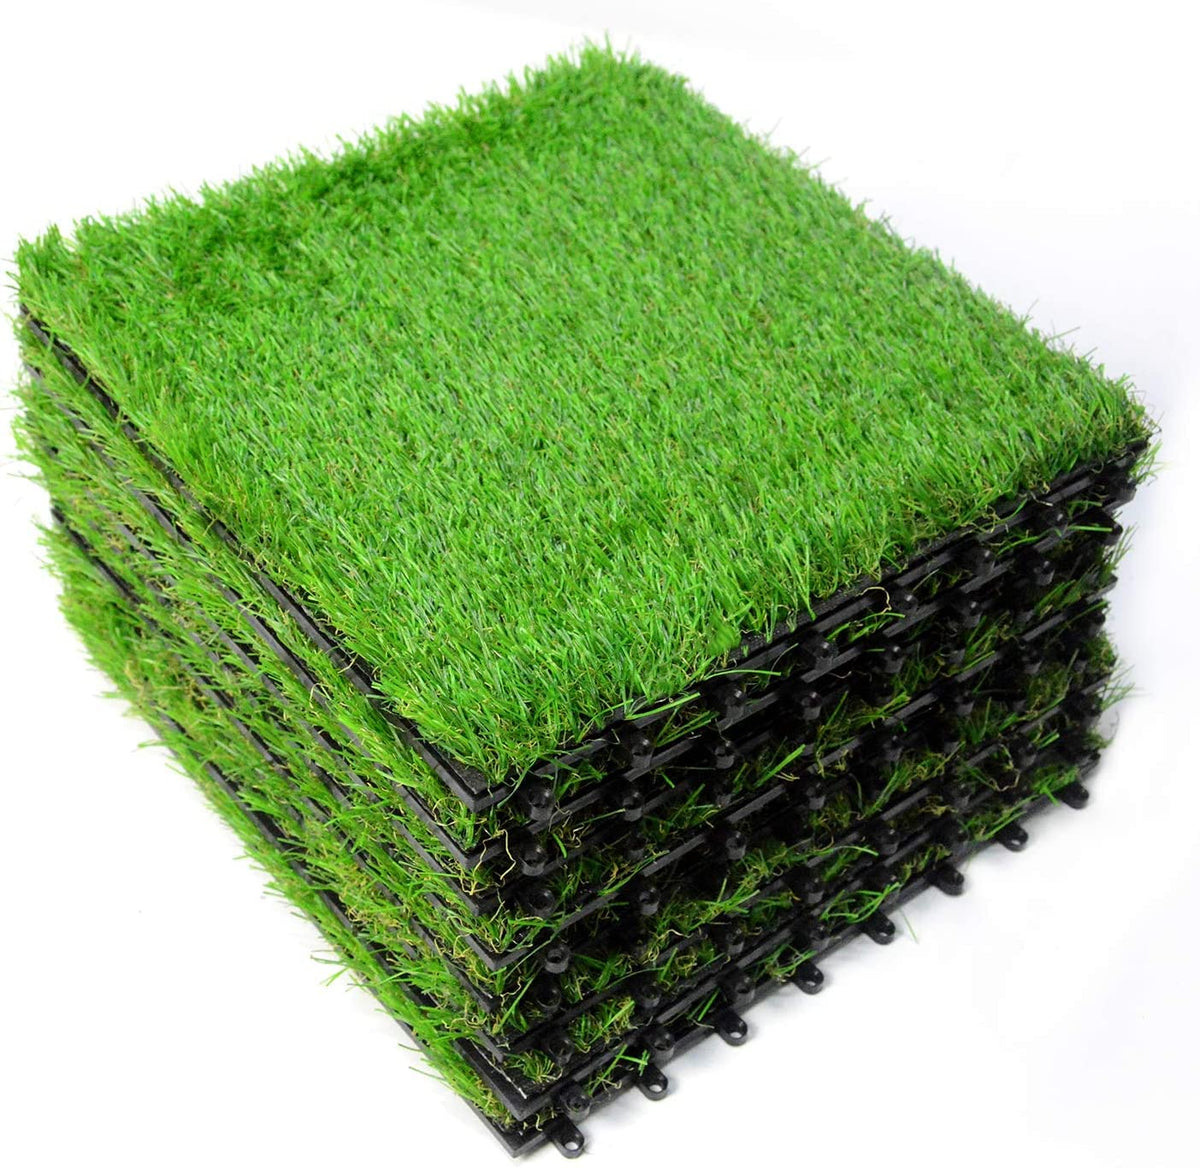 Plantex Tiles for Floor-High Density Grass Carpet Tiles/Garden Tile/Quick Flooring Solution for Indoor/Outdoor Deck Tile-Pack of 6 (1:1 Sq.Feet,APS-1213)